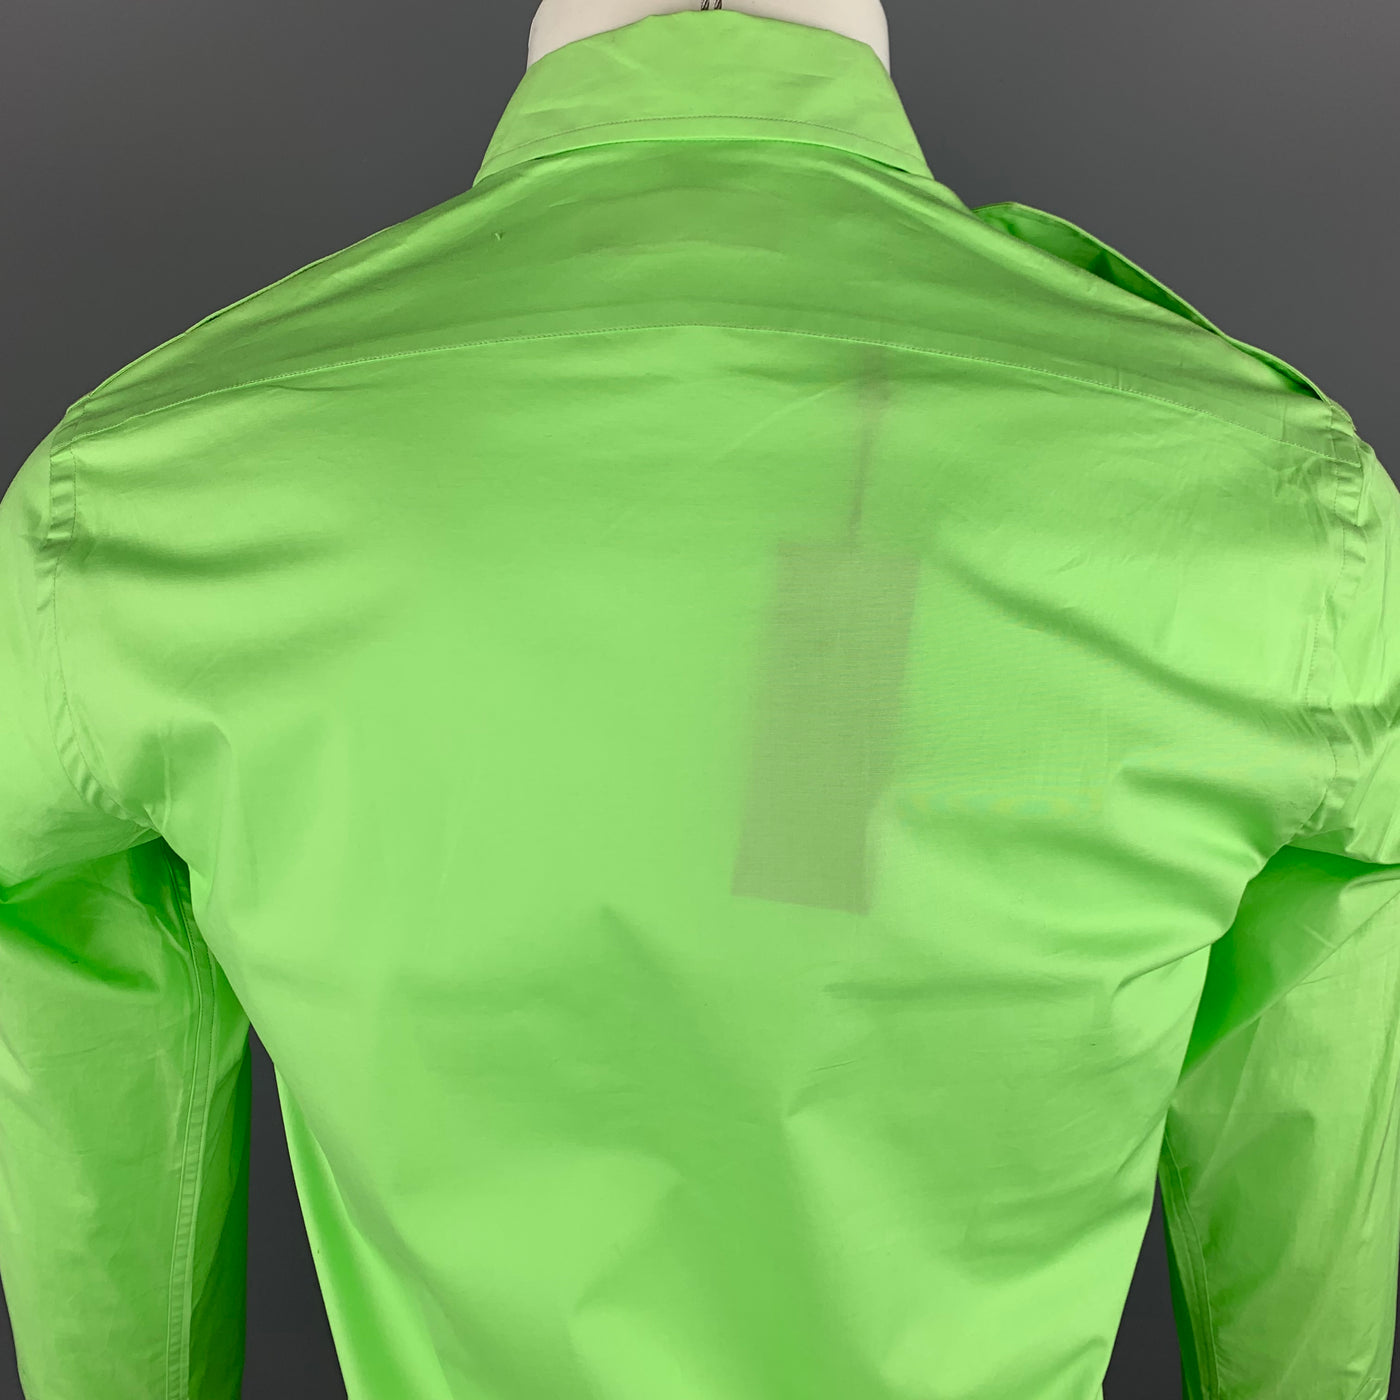 RALPH LAUREN Black Label S Lime Green Cotton Patch Pockets Long Sleeve Shirt